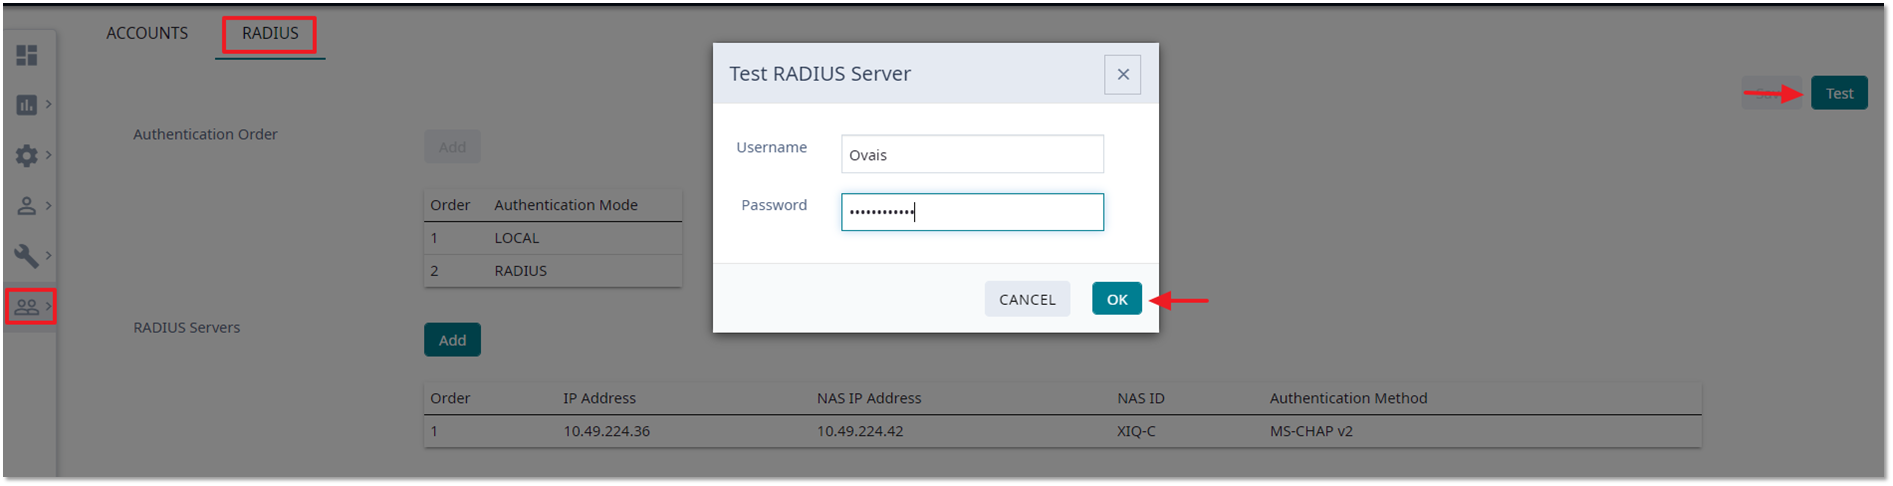 Test RADIUS server